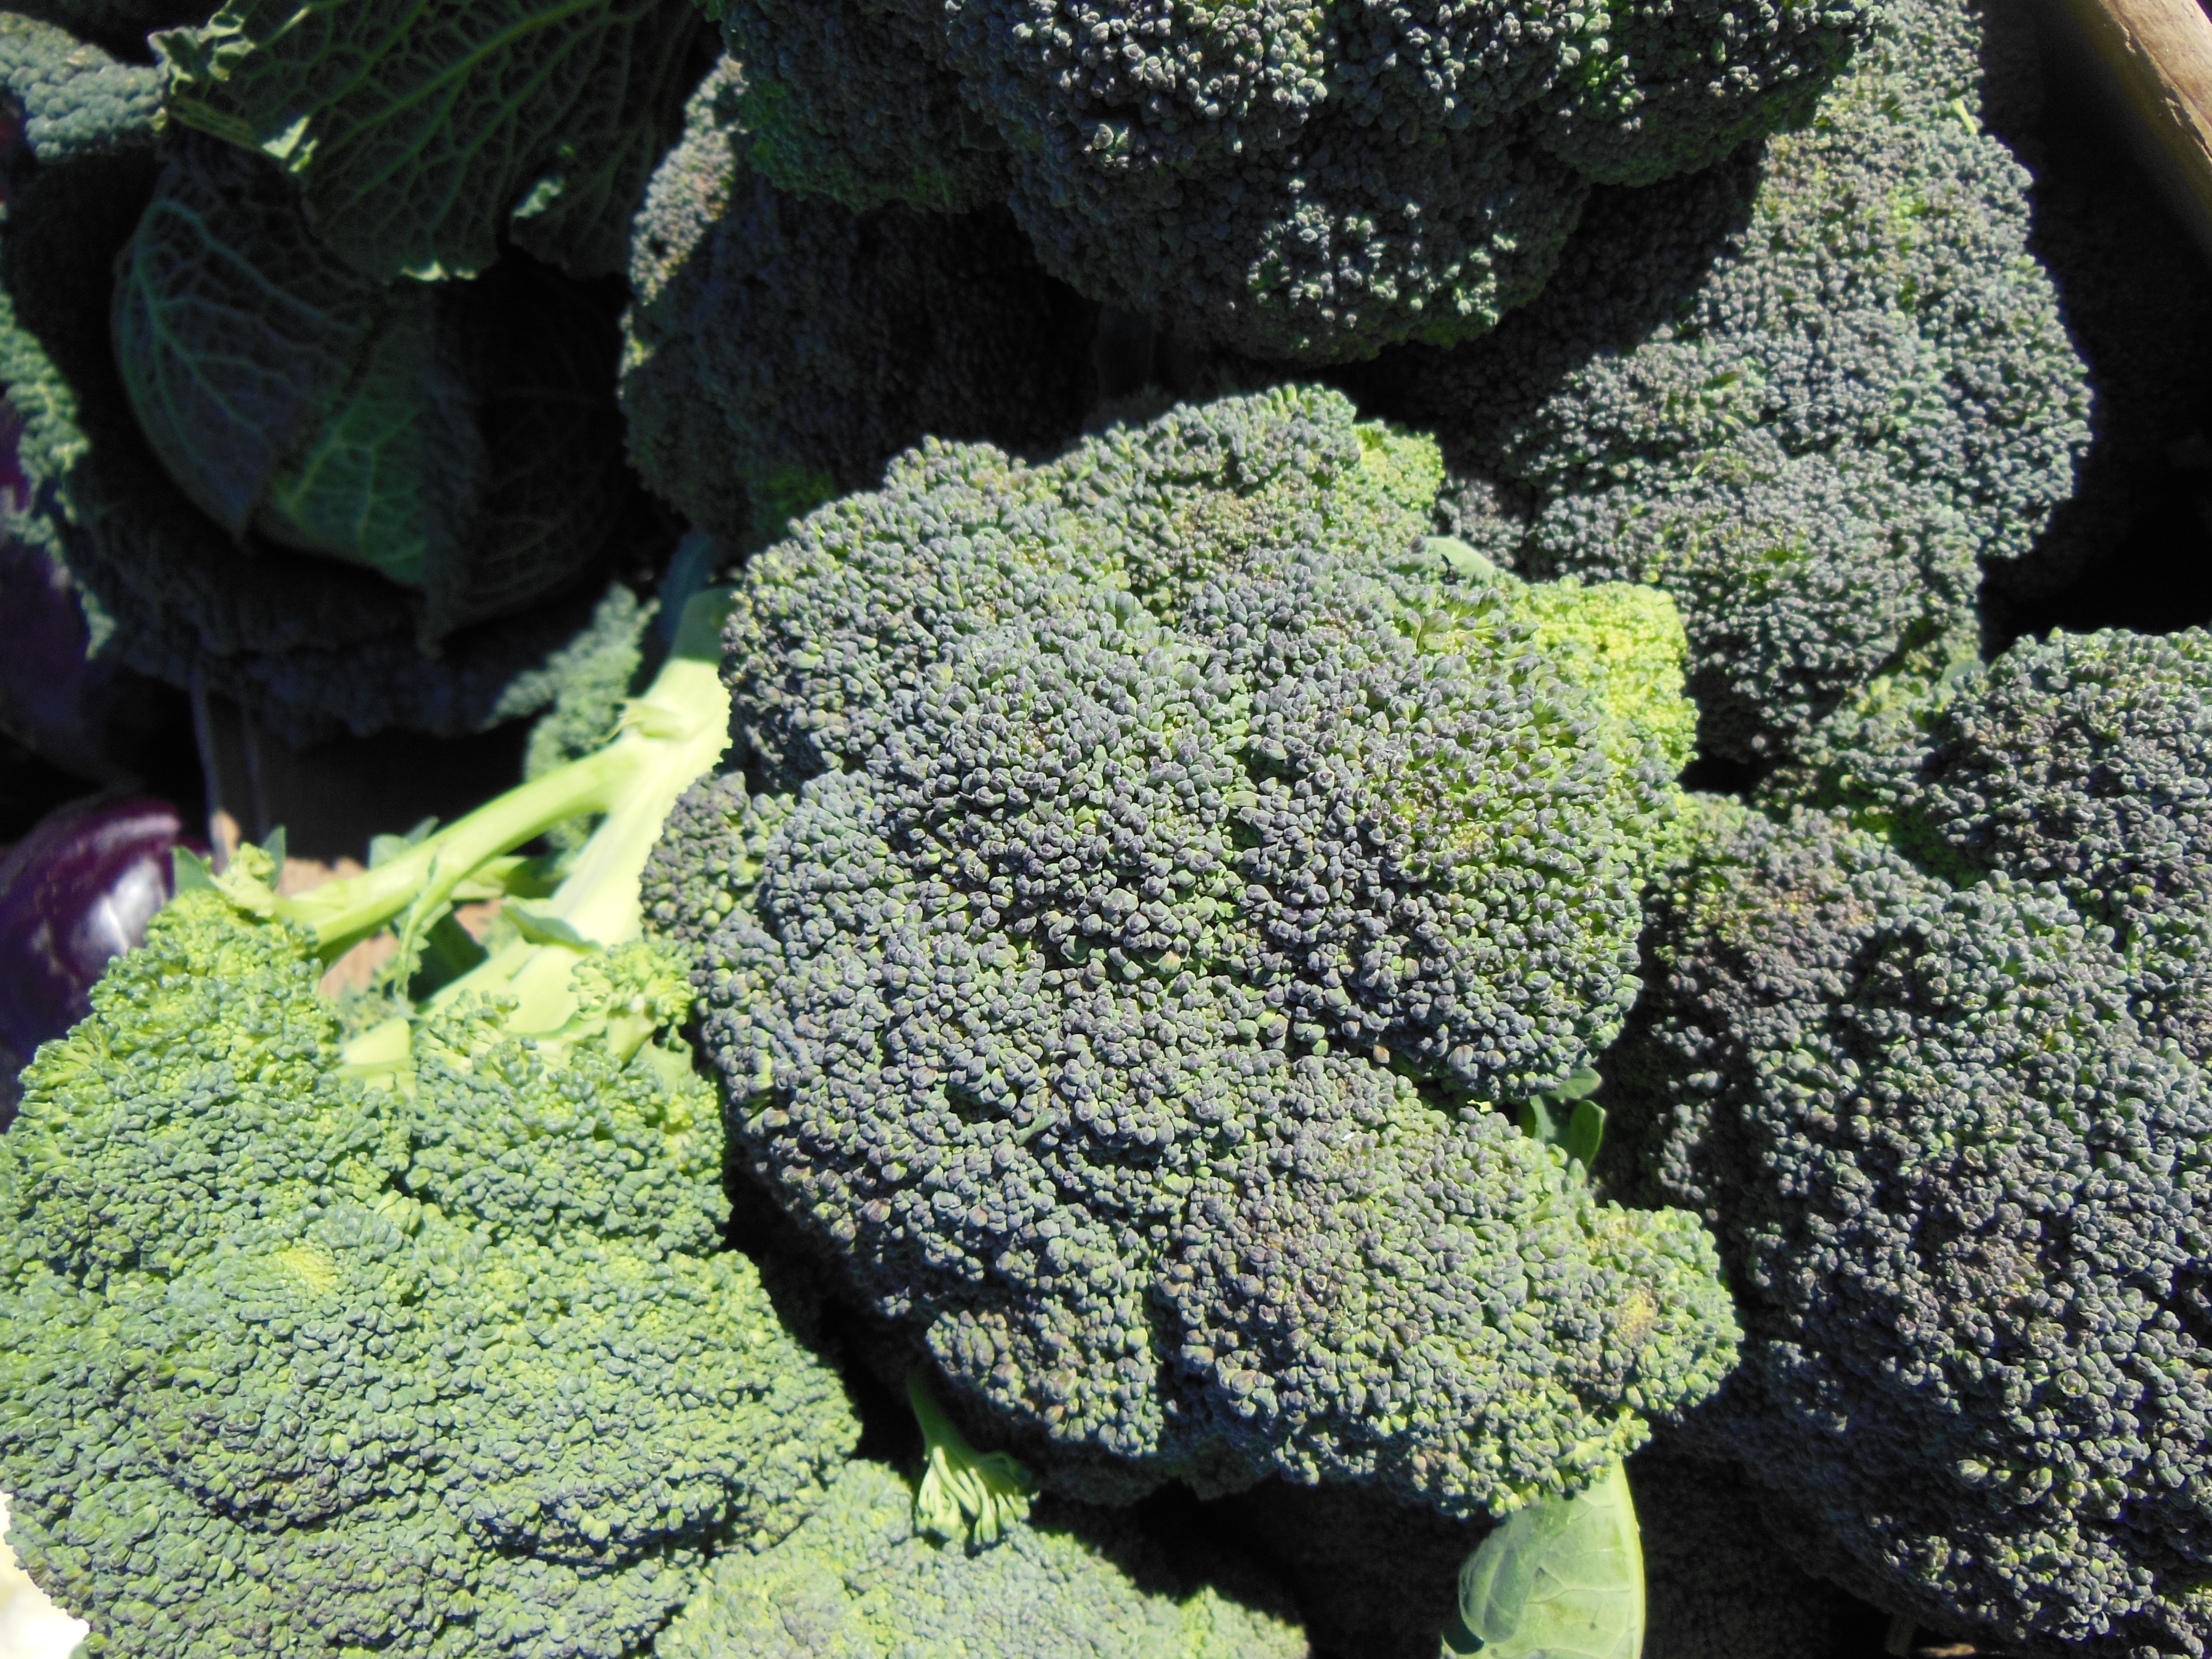 broccoli vegetables